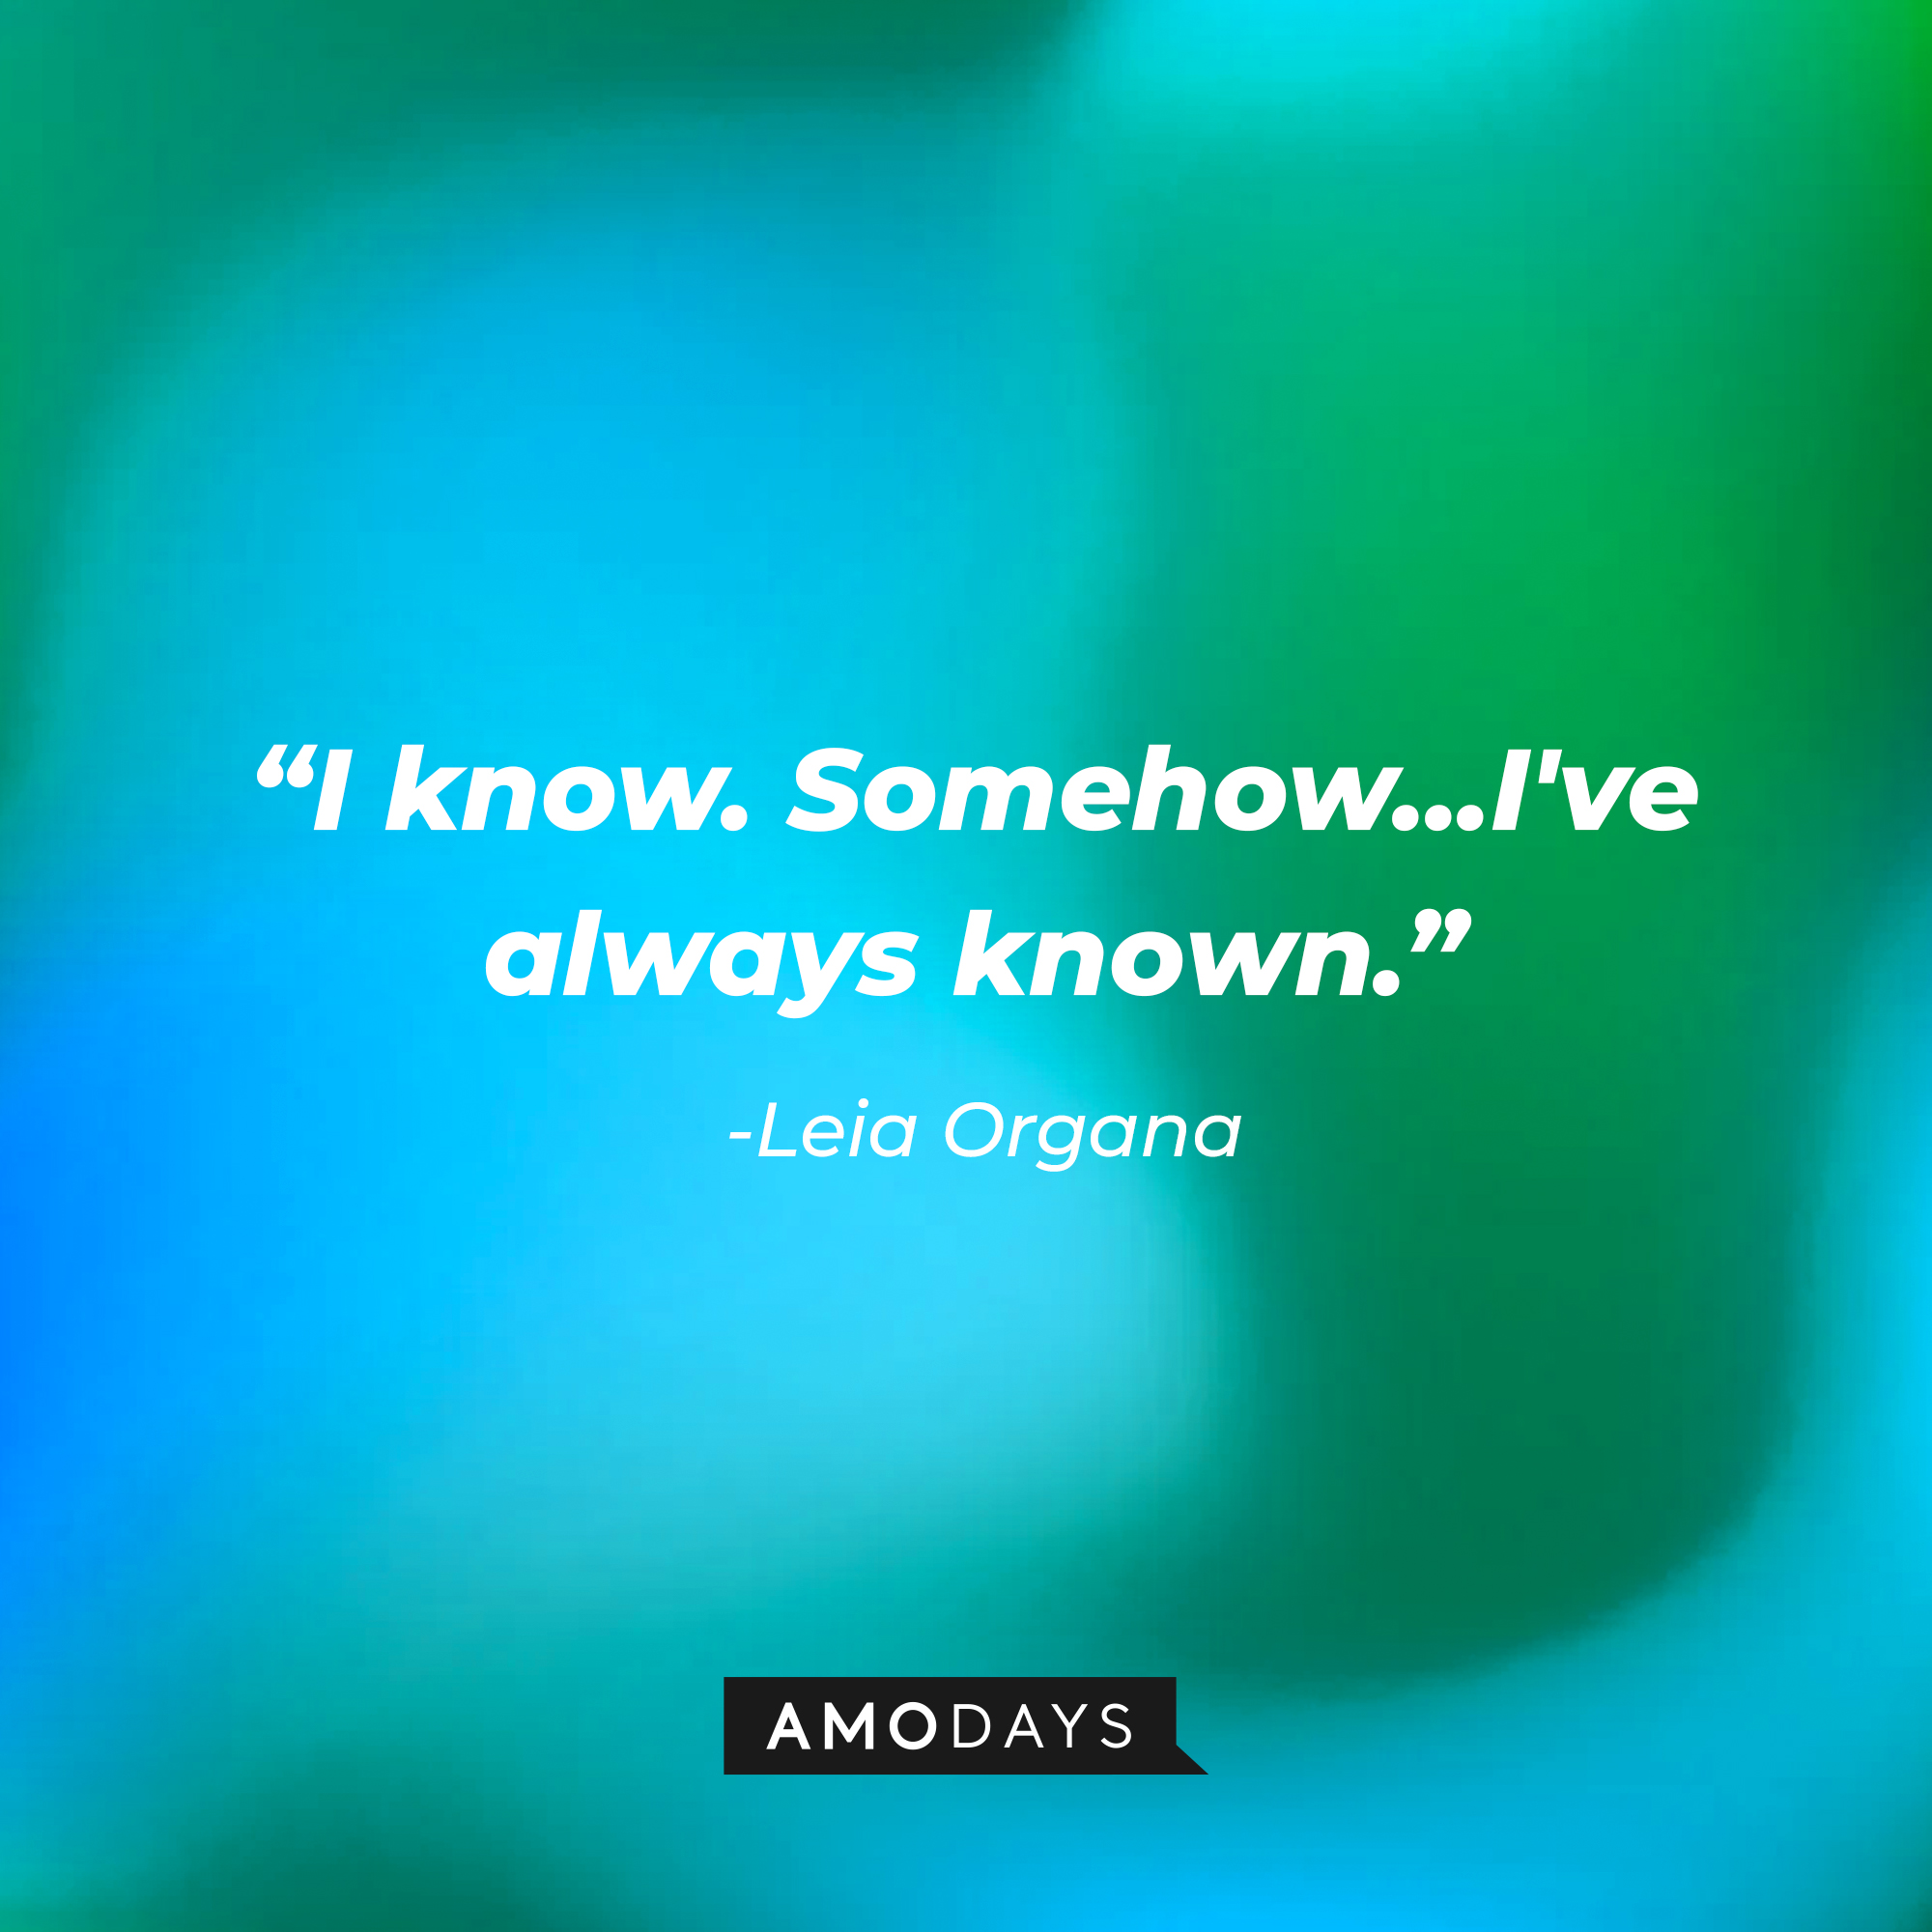 Leia Organa’s quote: “I know. Somehow...I've always known.” | Source: AmoDays